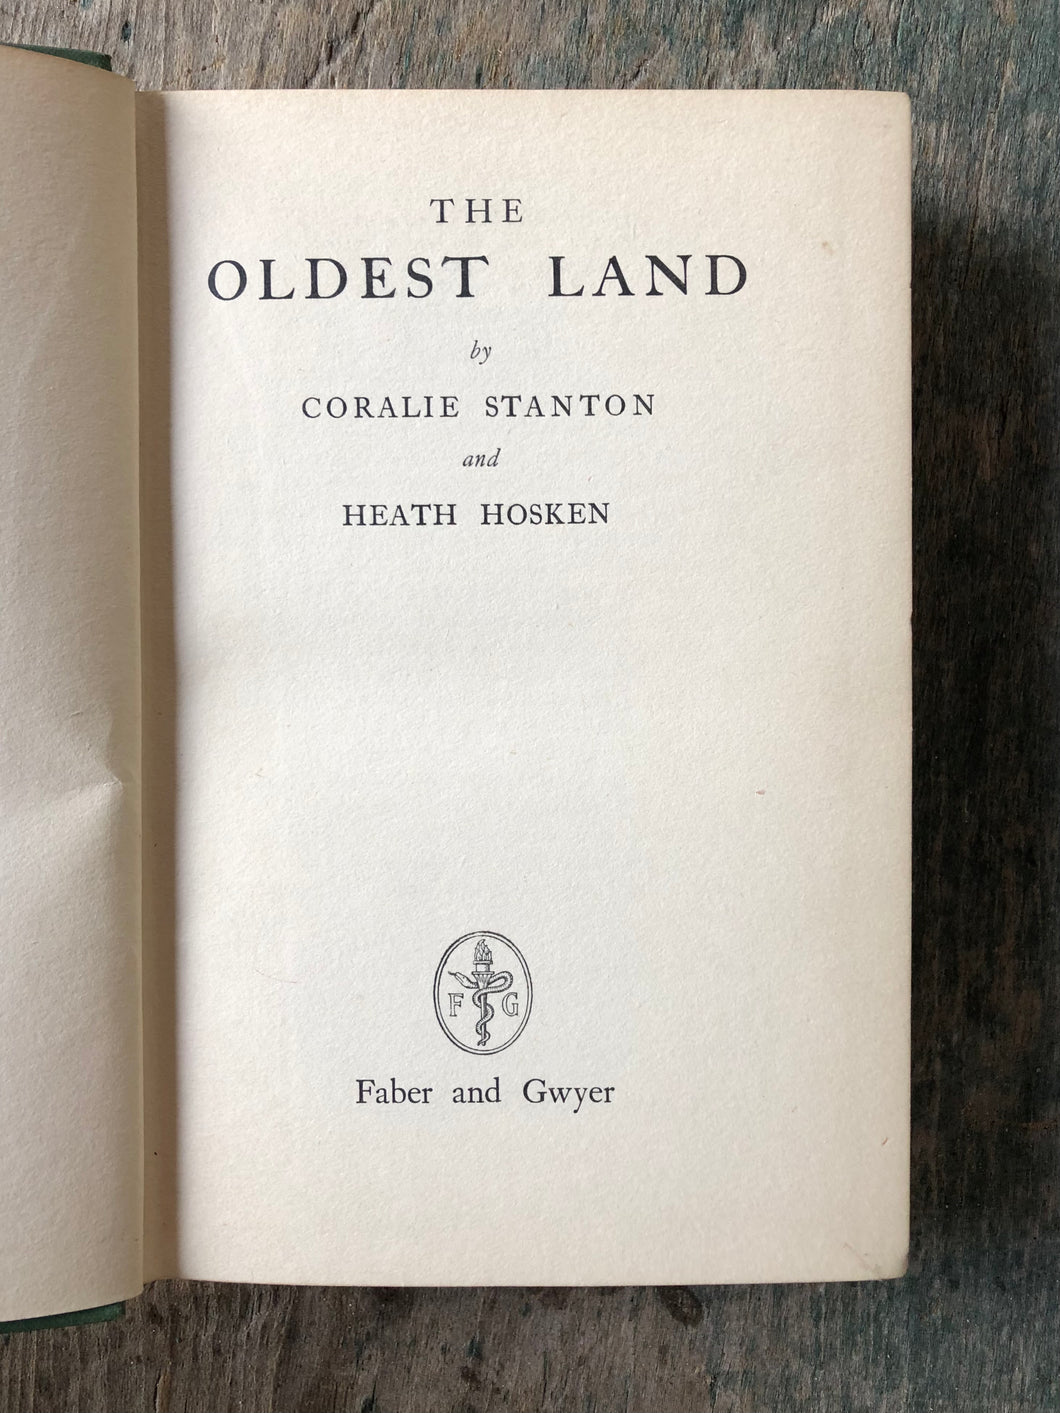 The Oldest Land by Coralie Stanton and Heath Hosken